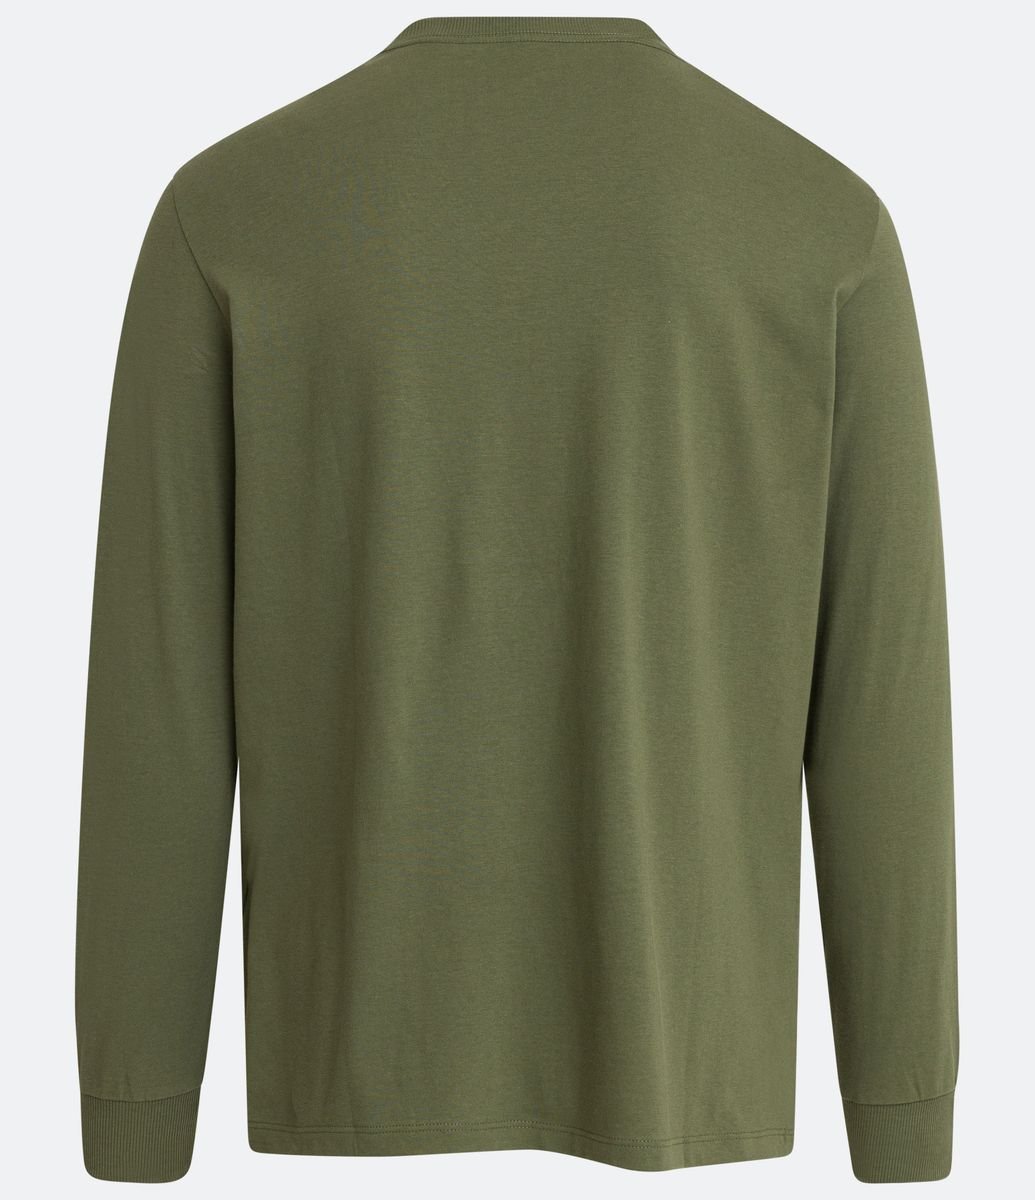 388CMLV Camisa verde poliéster/algodón 95 gr. Marga larga